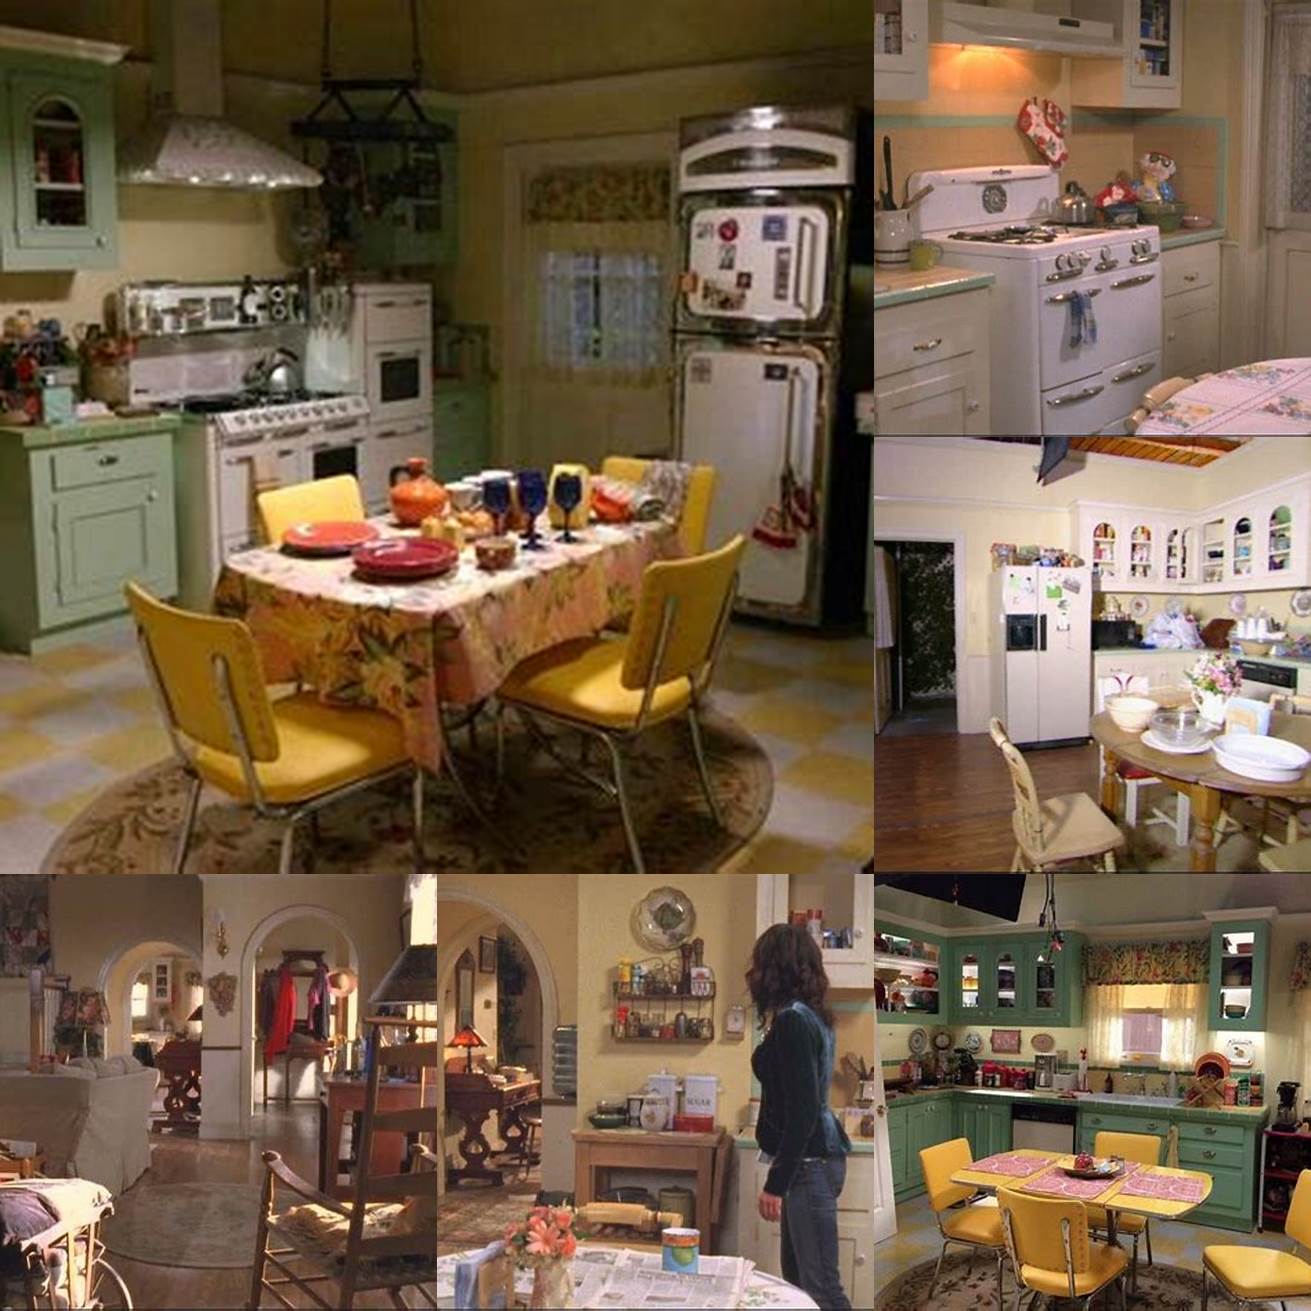 The kitchen in Gilmore Girls